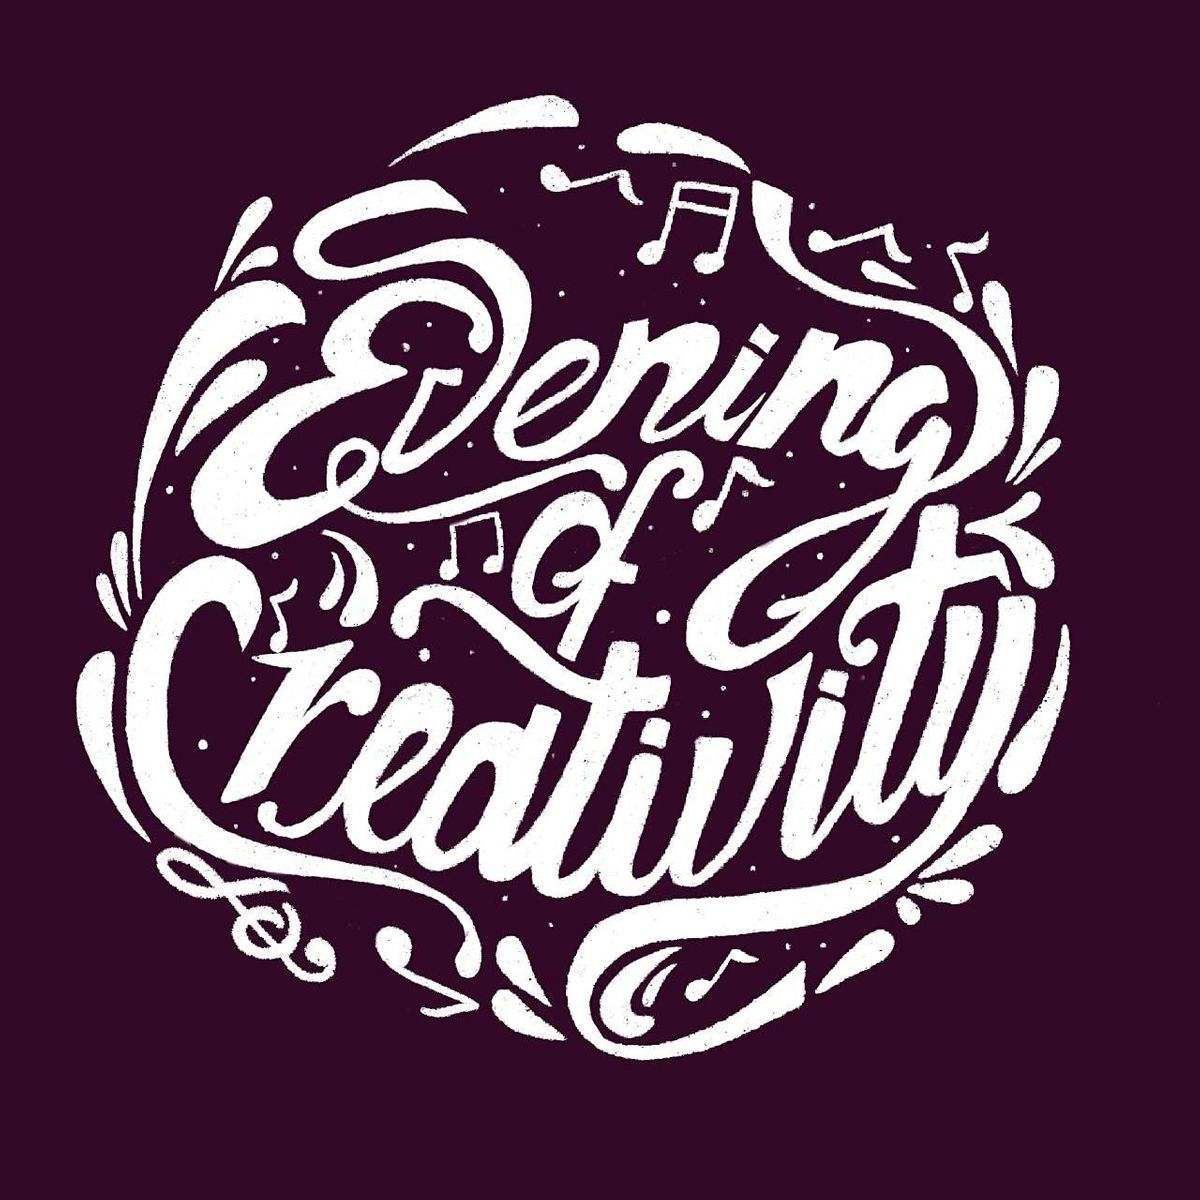 Evening of Creativity - August 20th, 2021